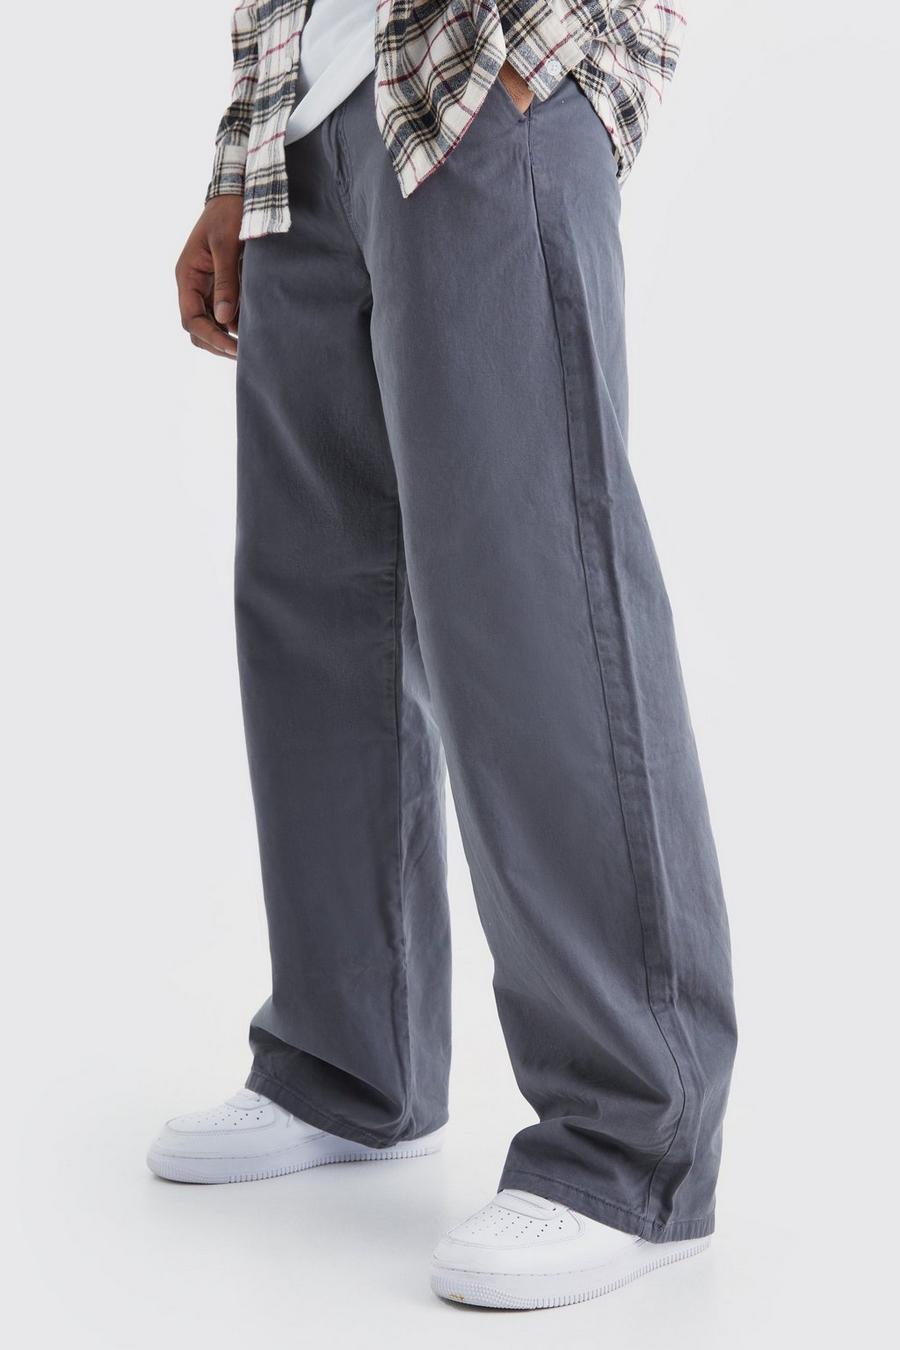 Tall Chino-Hose mit weitem Bein, Charcoal grey